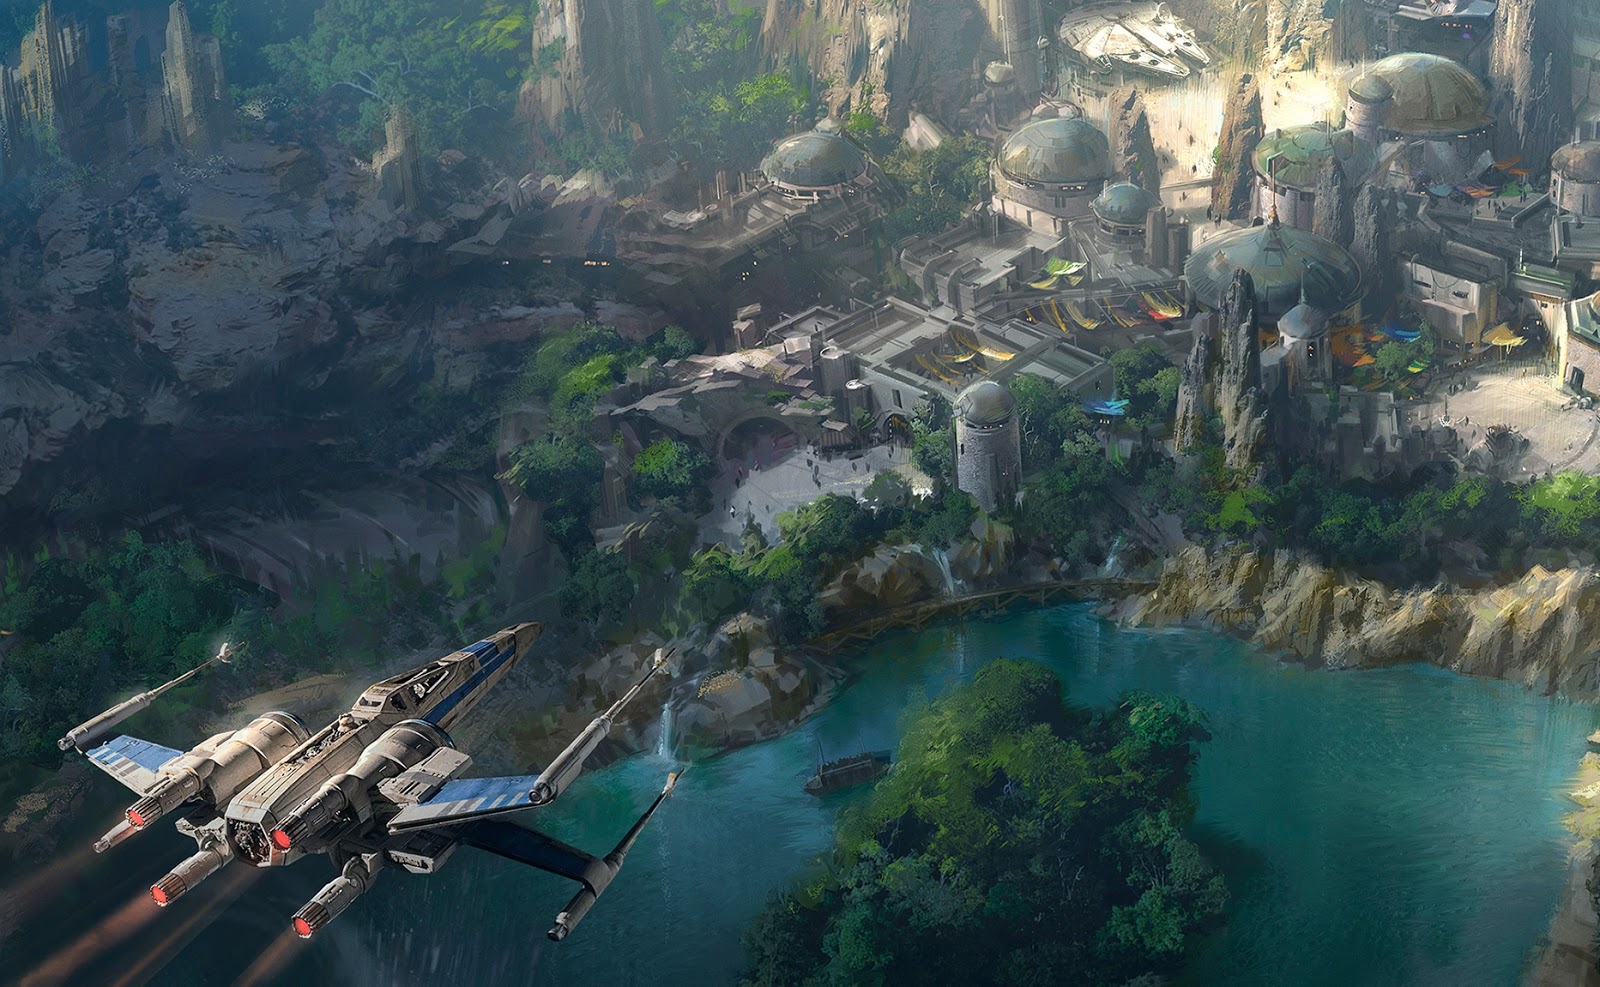 New 'Star Wars Land' Concept Art Revealed | The Star Wars Underworld